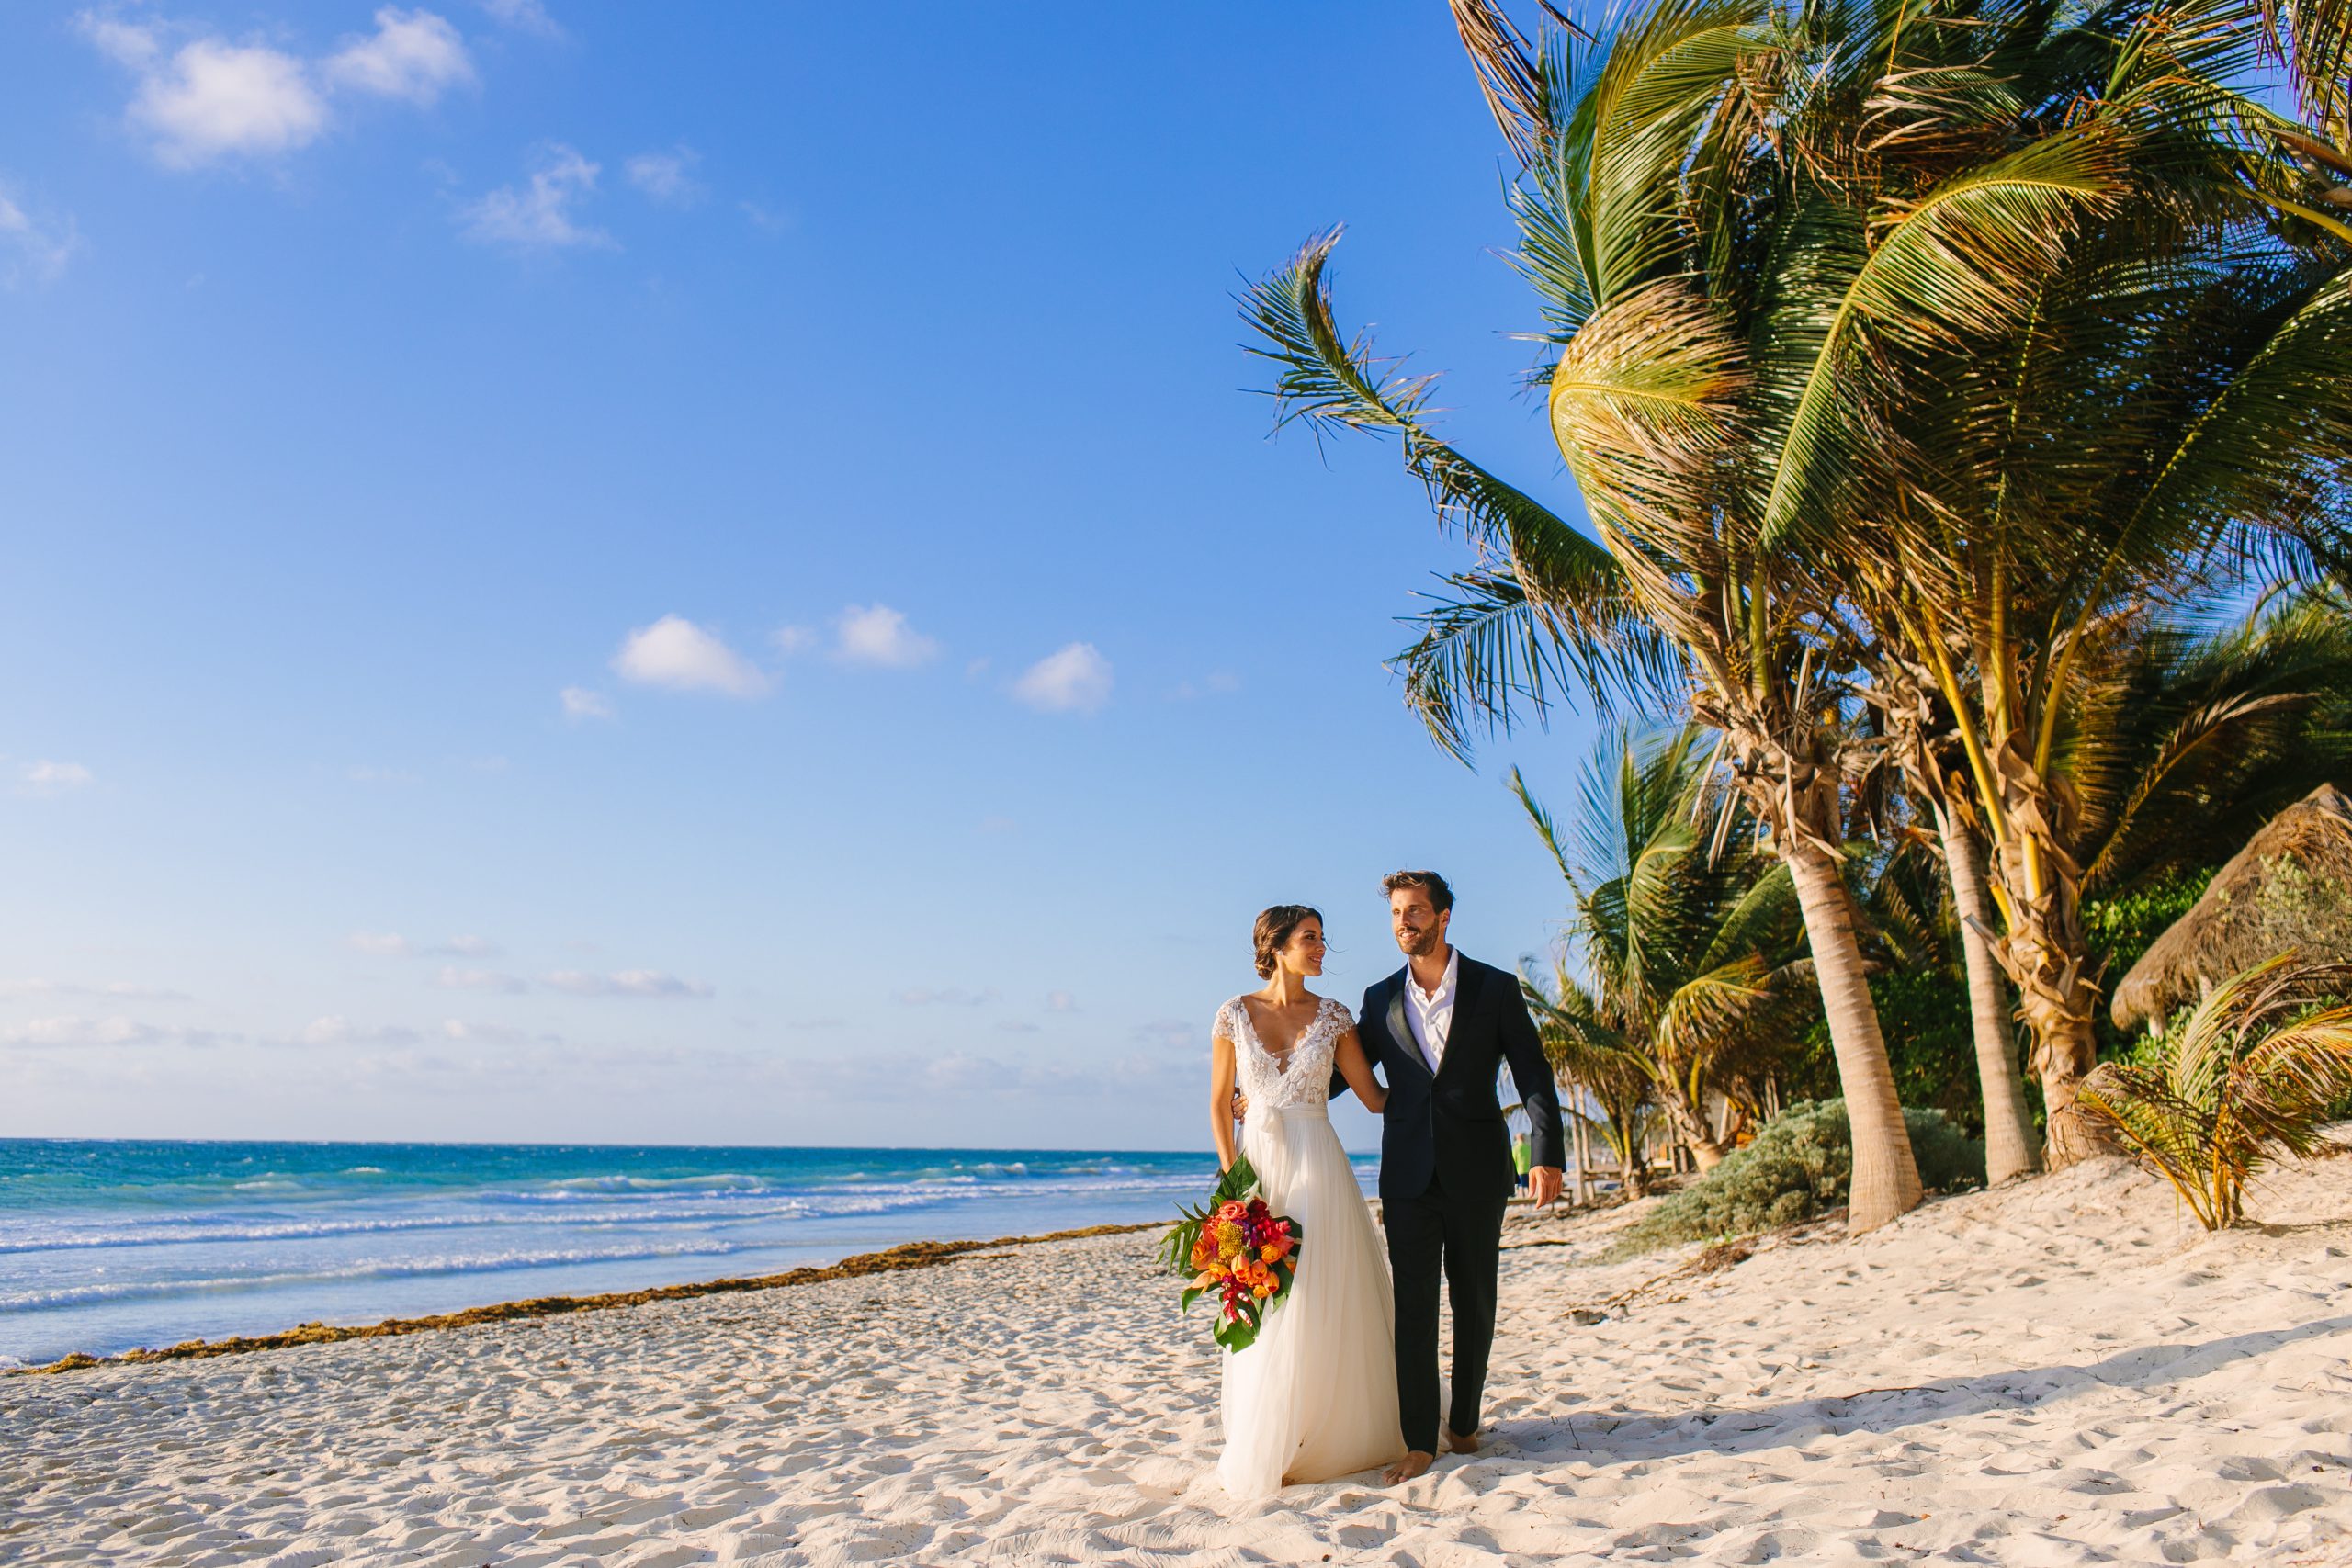 Beach Wedding Dresses - Largest Selection - Kleinfeld | Kleinfeld Bridal